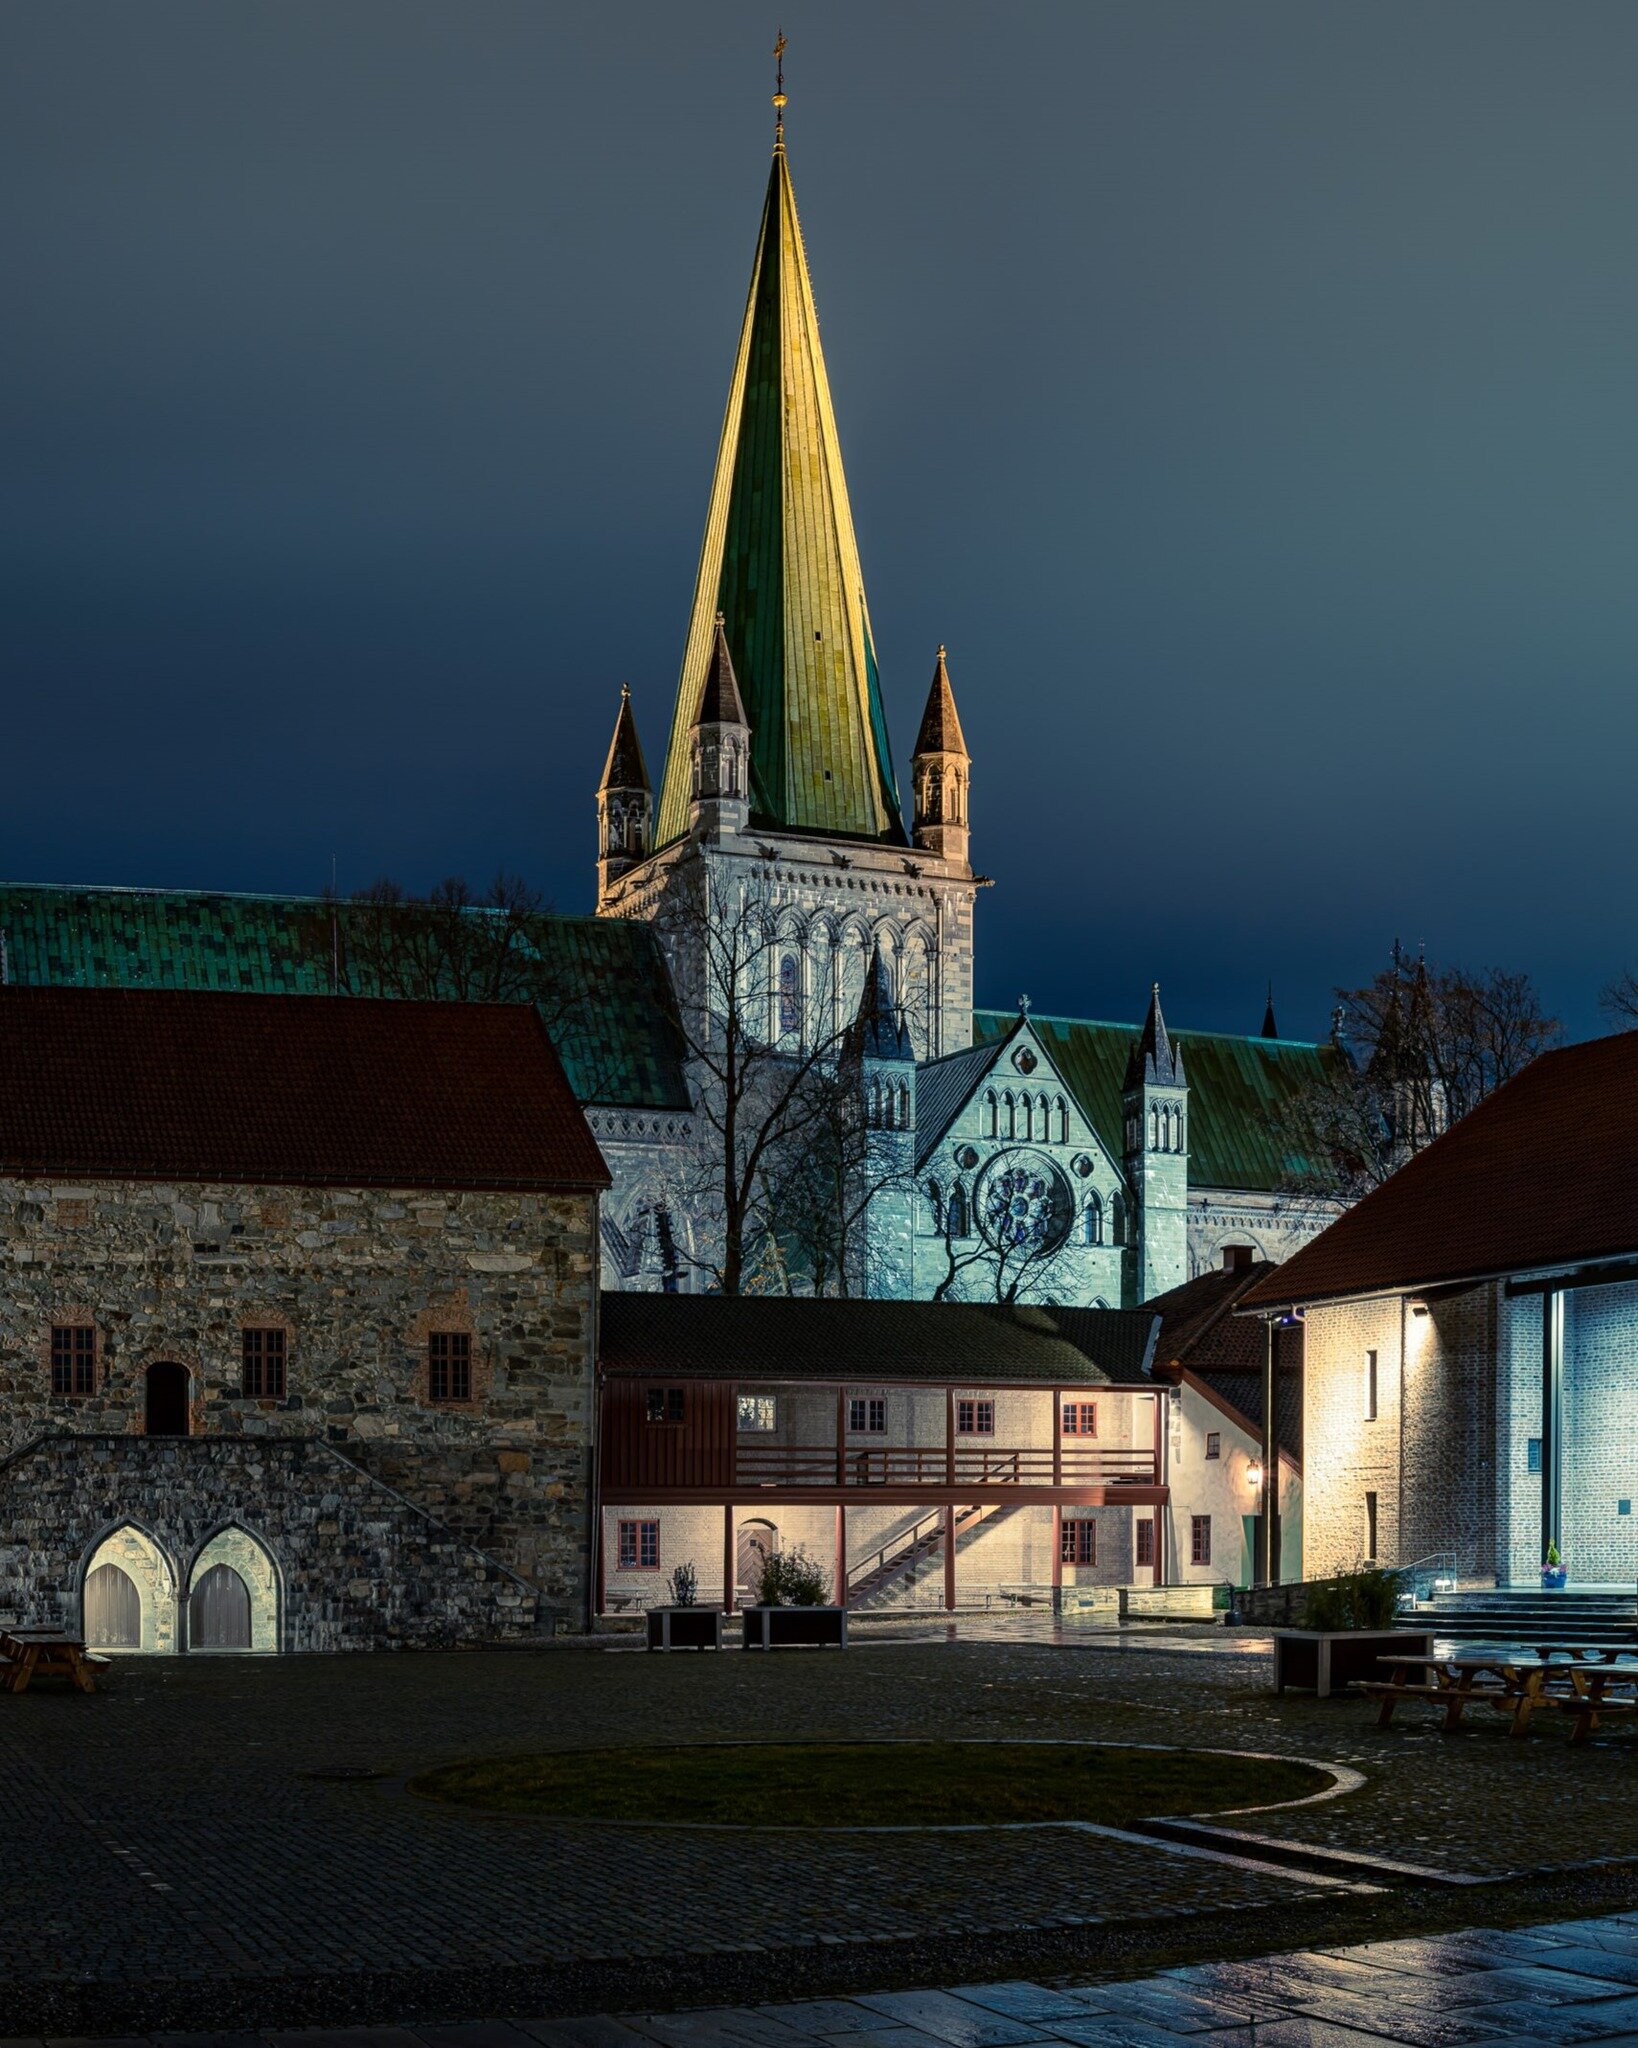 Nidarosdomen by night ✨📸 
📍 Destination Trondheim, Norway. 

📸: @sven_erik_knoff | fotoknoff.no 
.
.
.
@nidarosdomen #nidarosdomen #nidarosdomencathedral #visittrondheim #visitnorway #norges_fotografer #ig_norway #thebestofnorway #trondheim #norwa